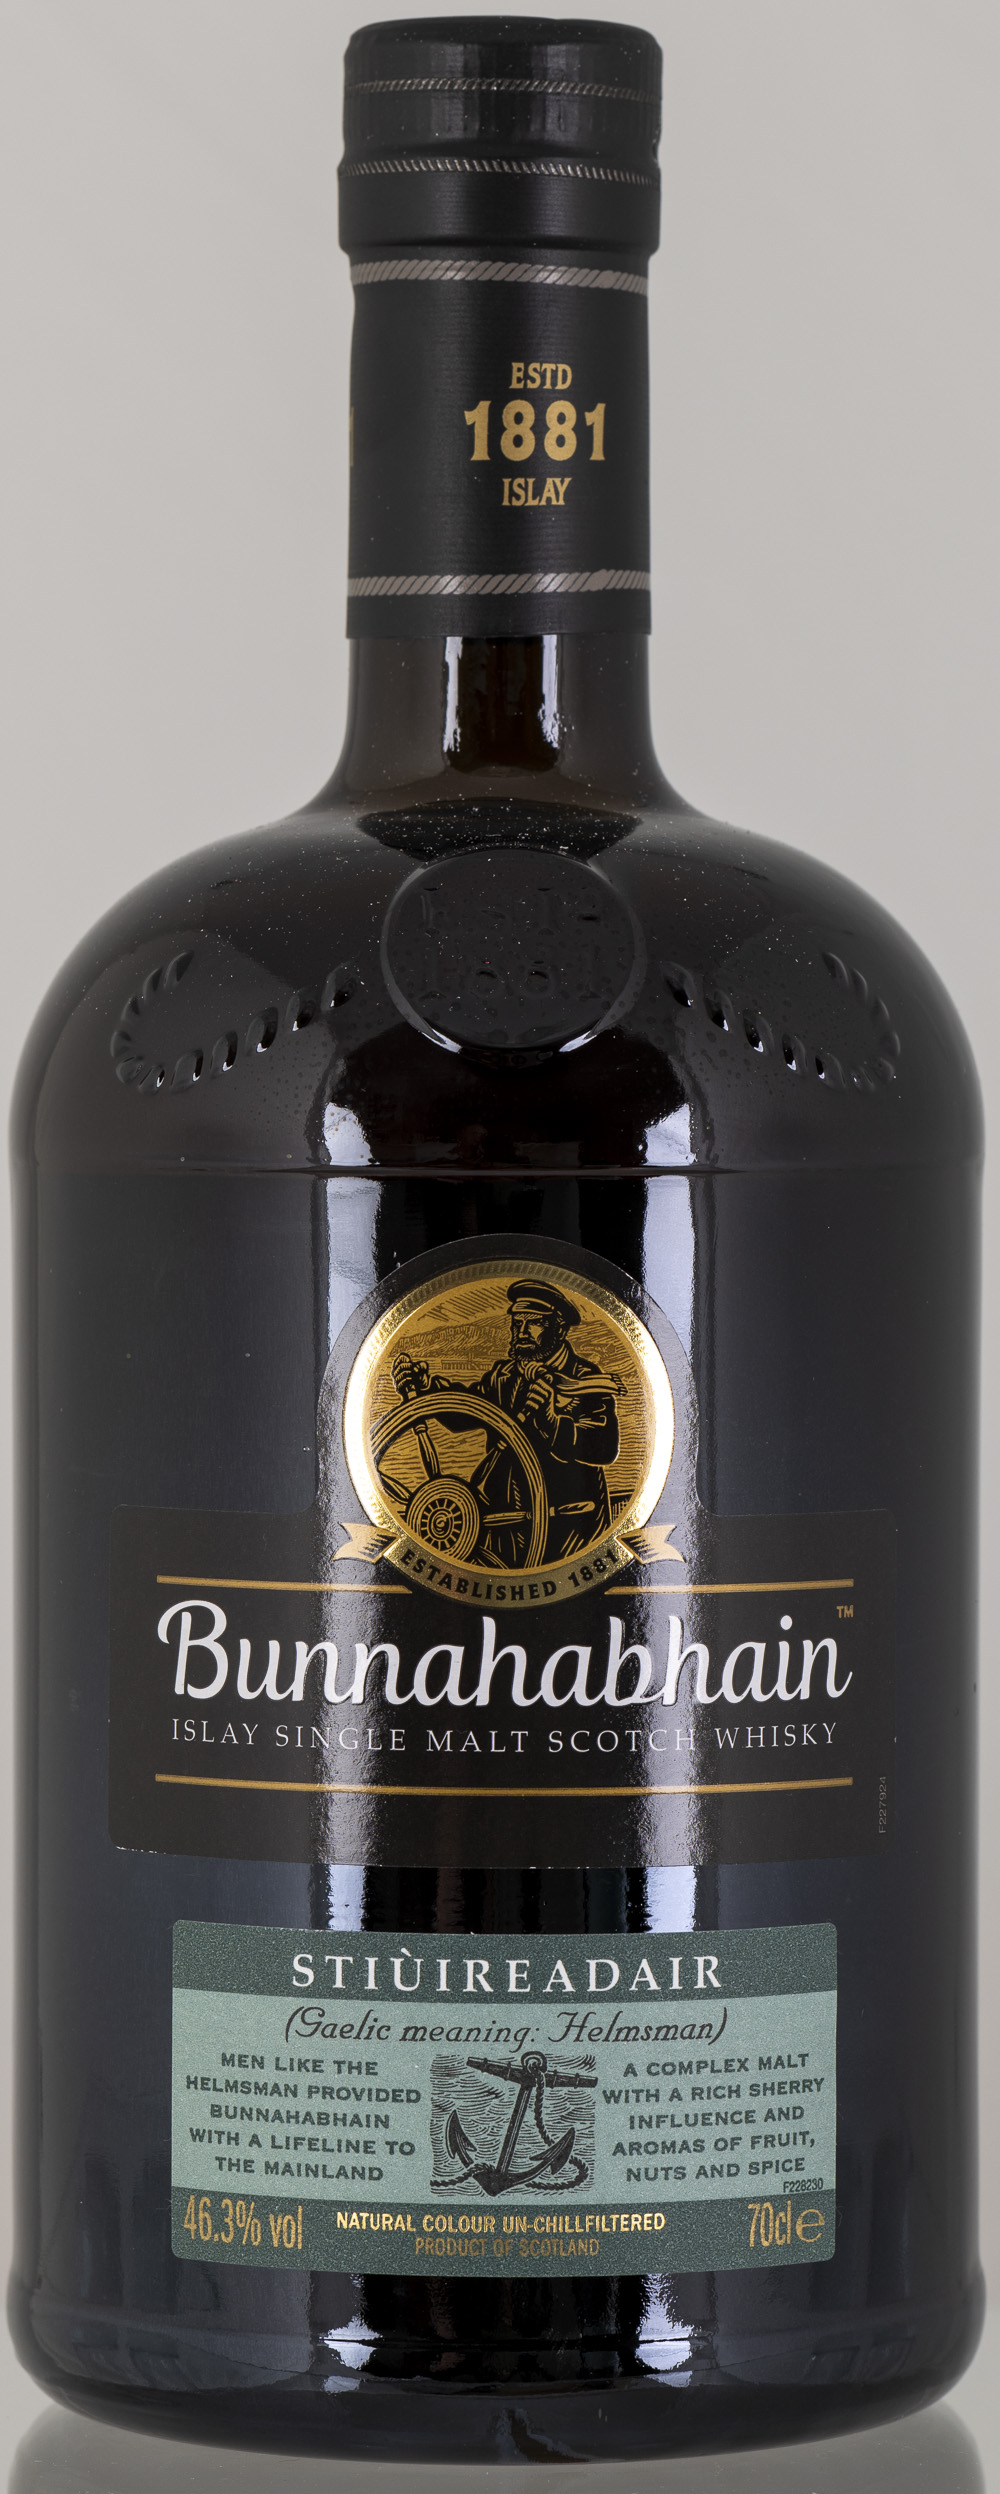 Billede: PHC_2198 - Bunnahabhain Stiuireadair - bottle front.jpg